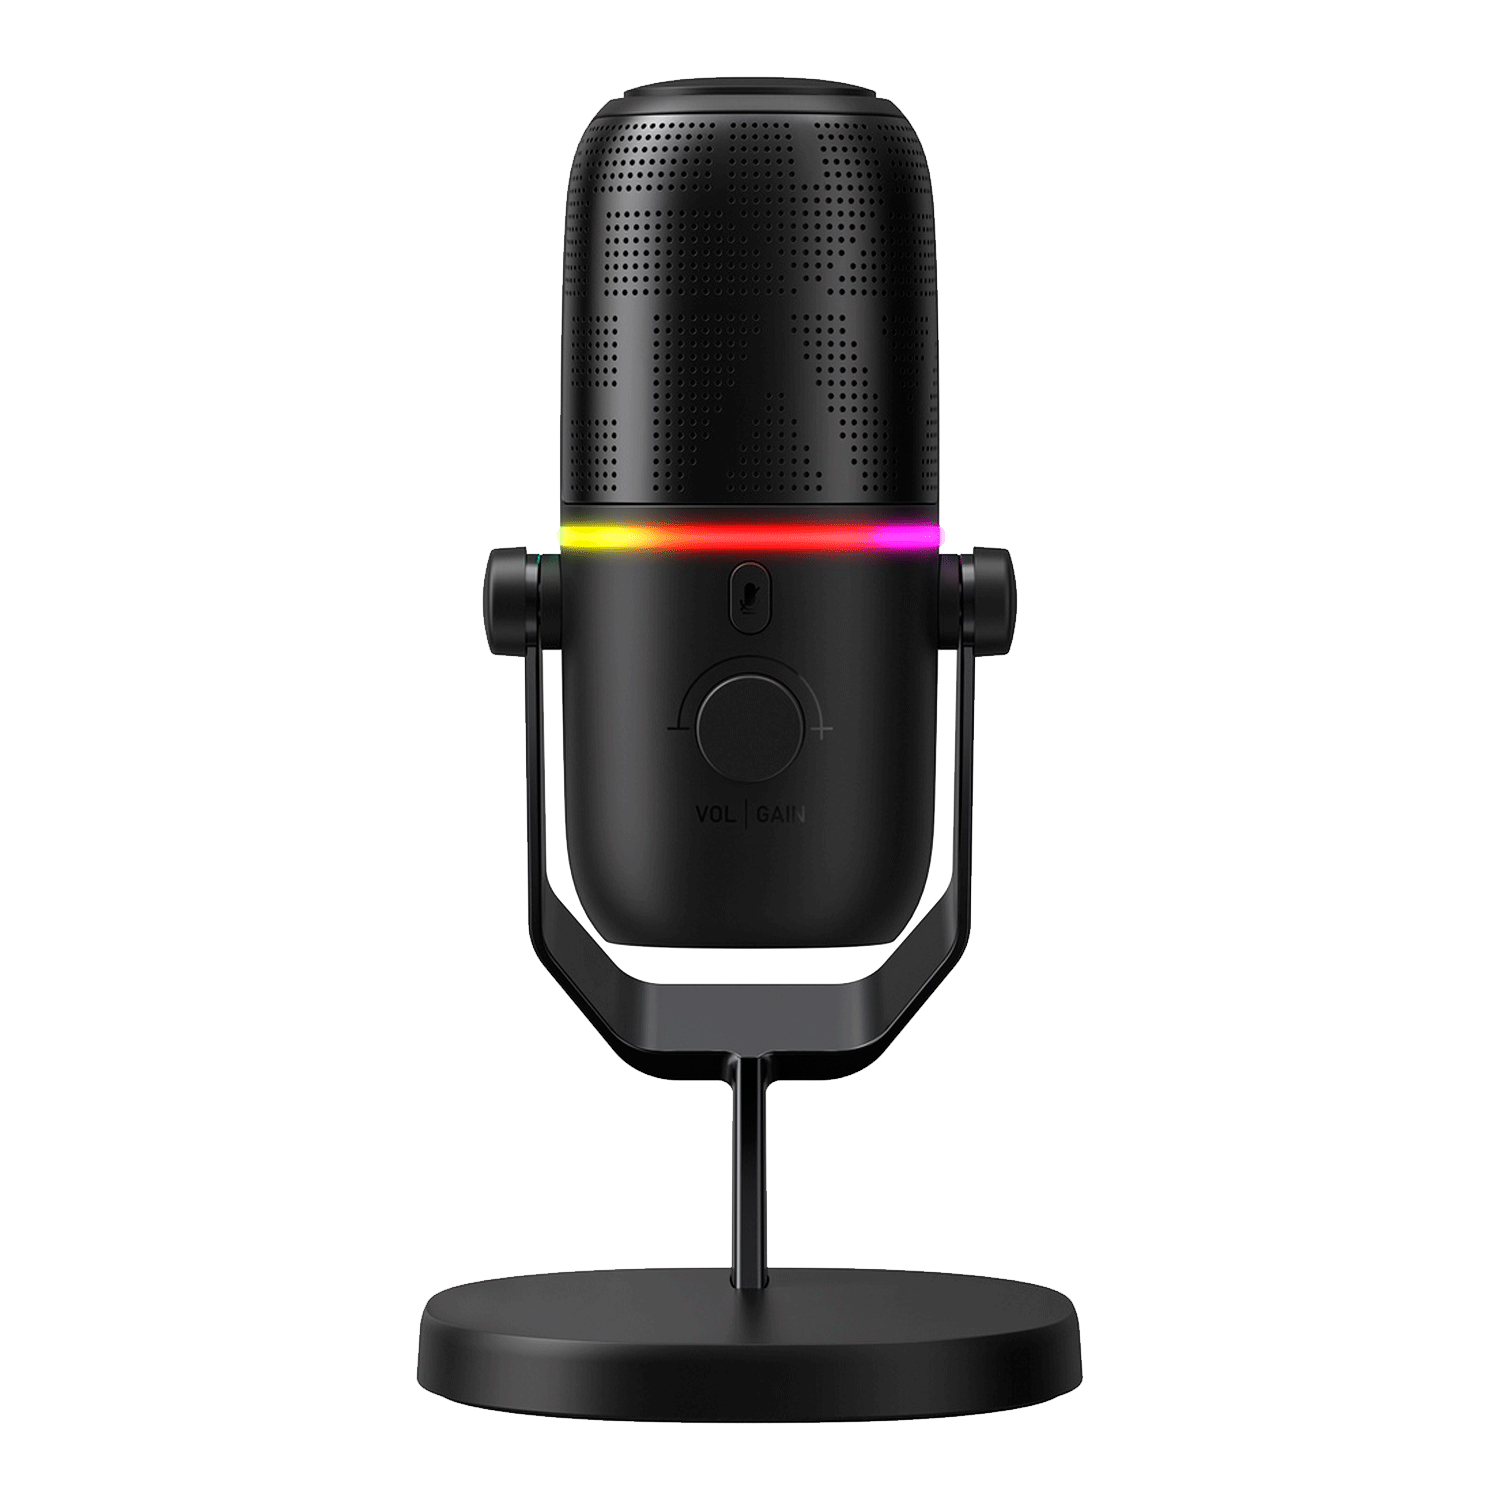 Haylou GX1 RGB Microphone